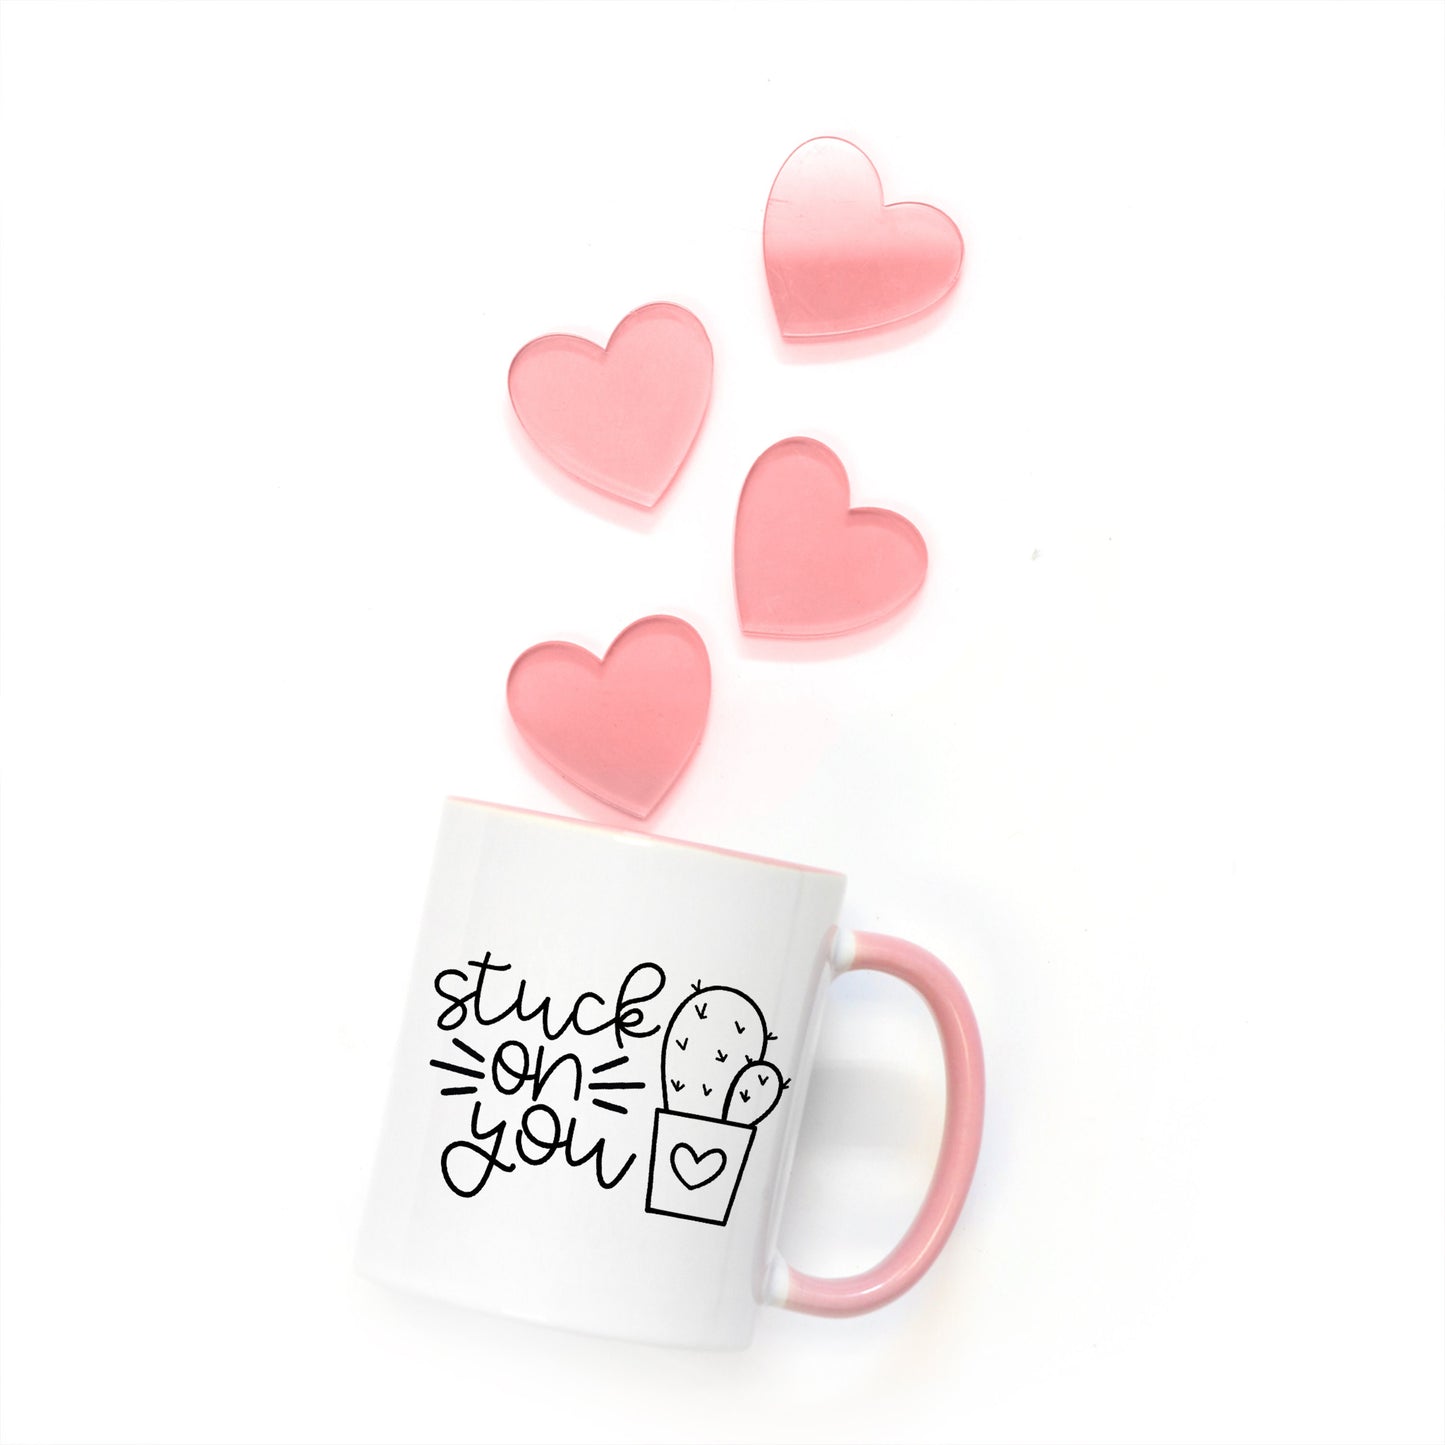 Stuck on You - Valentine's Coffee Mug - Plant Lover Gift